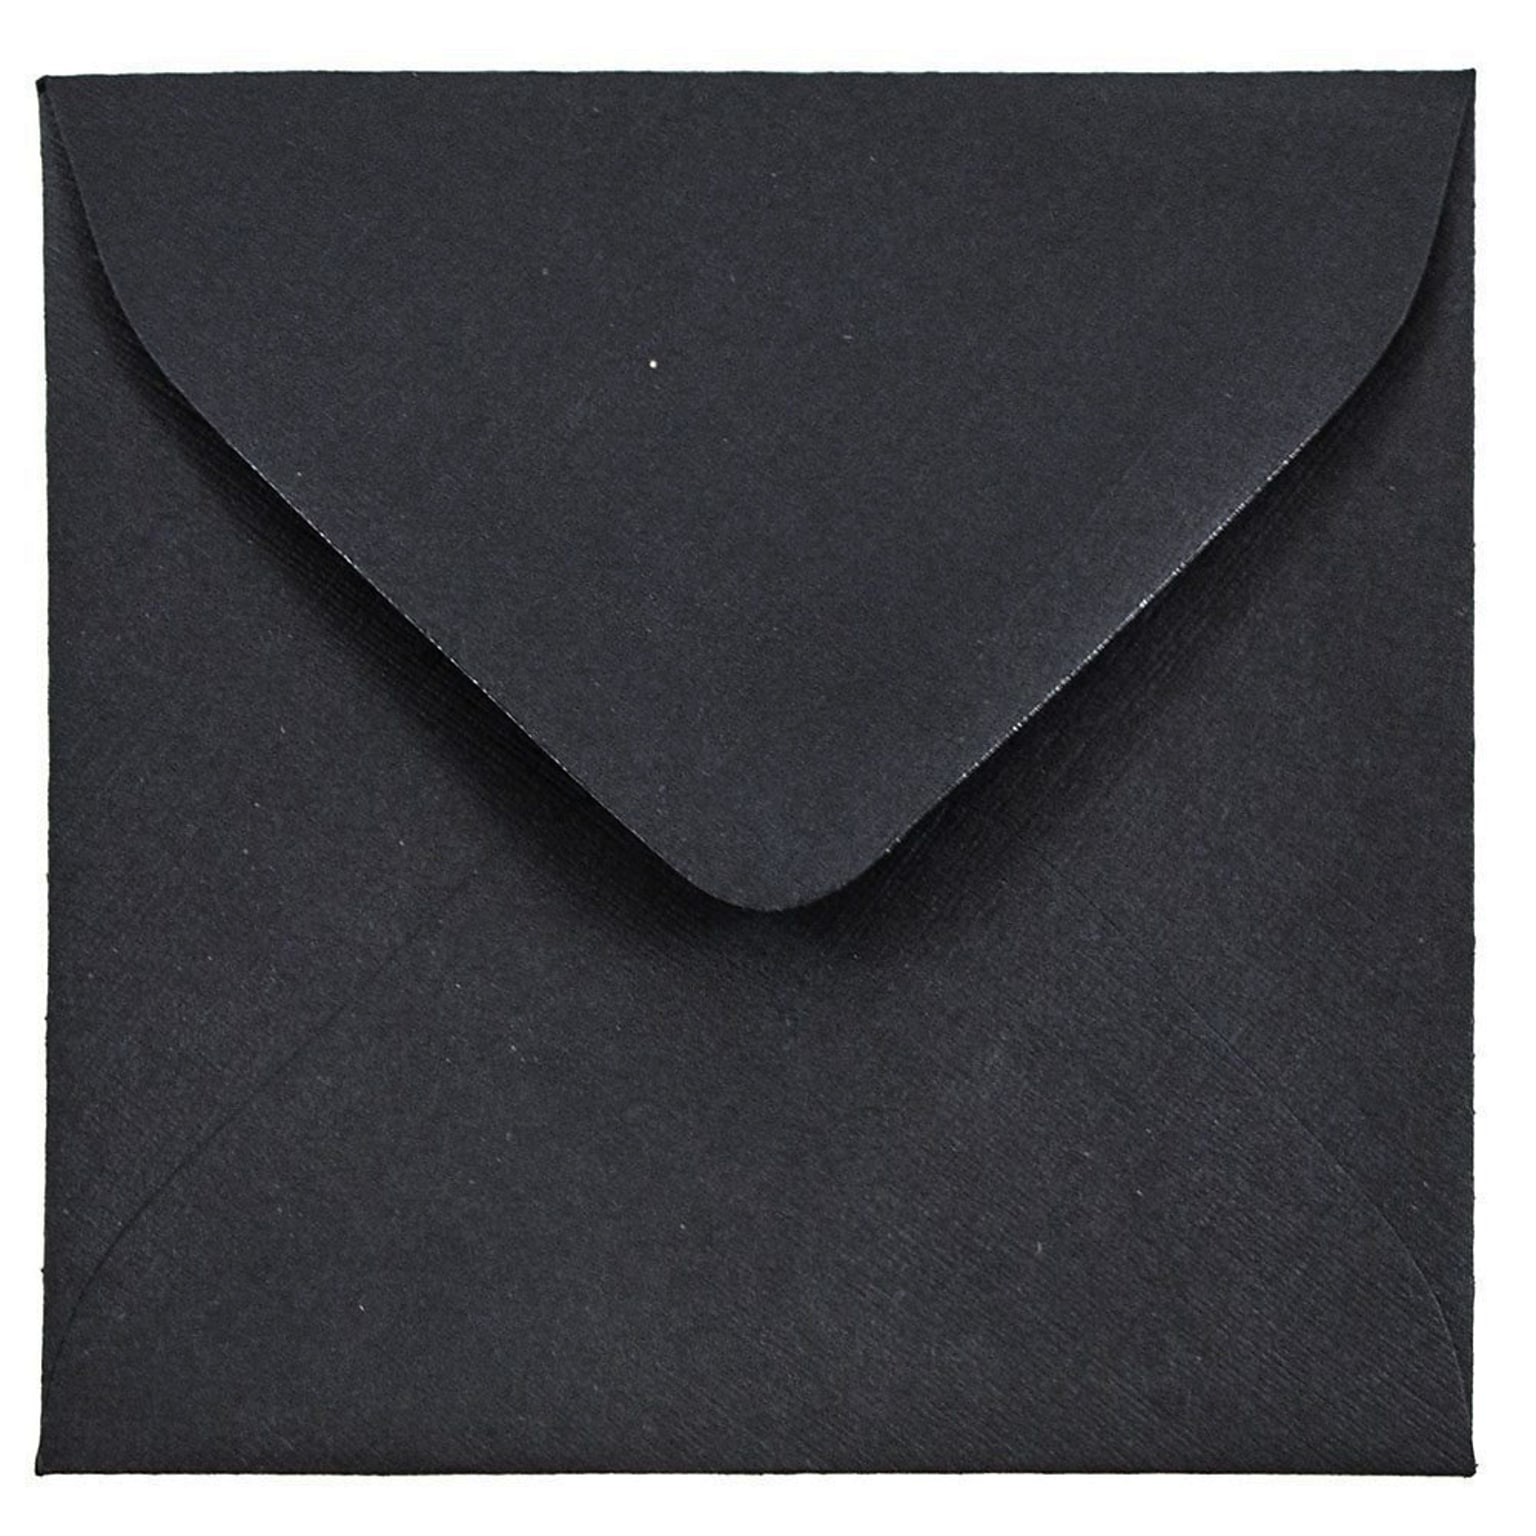 JAM Paper 3.125 x 3.125 Mini Square Invitation Envelopes, Black Linen, 25/Pack (V01200)